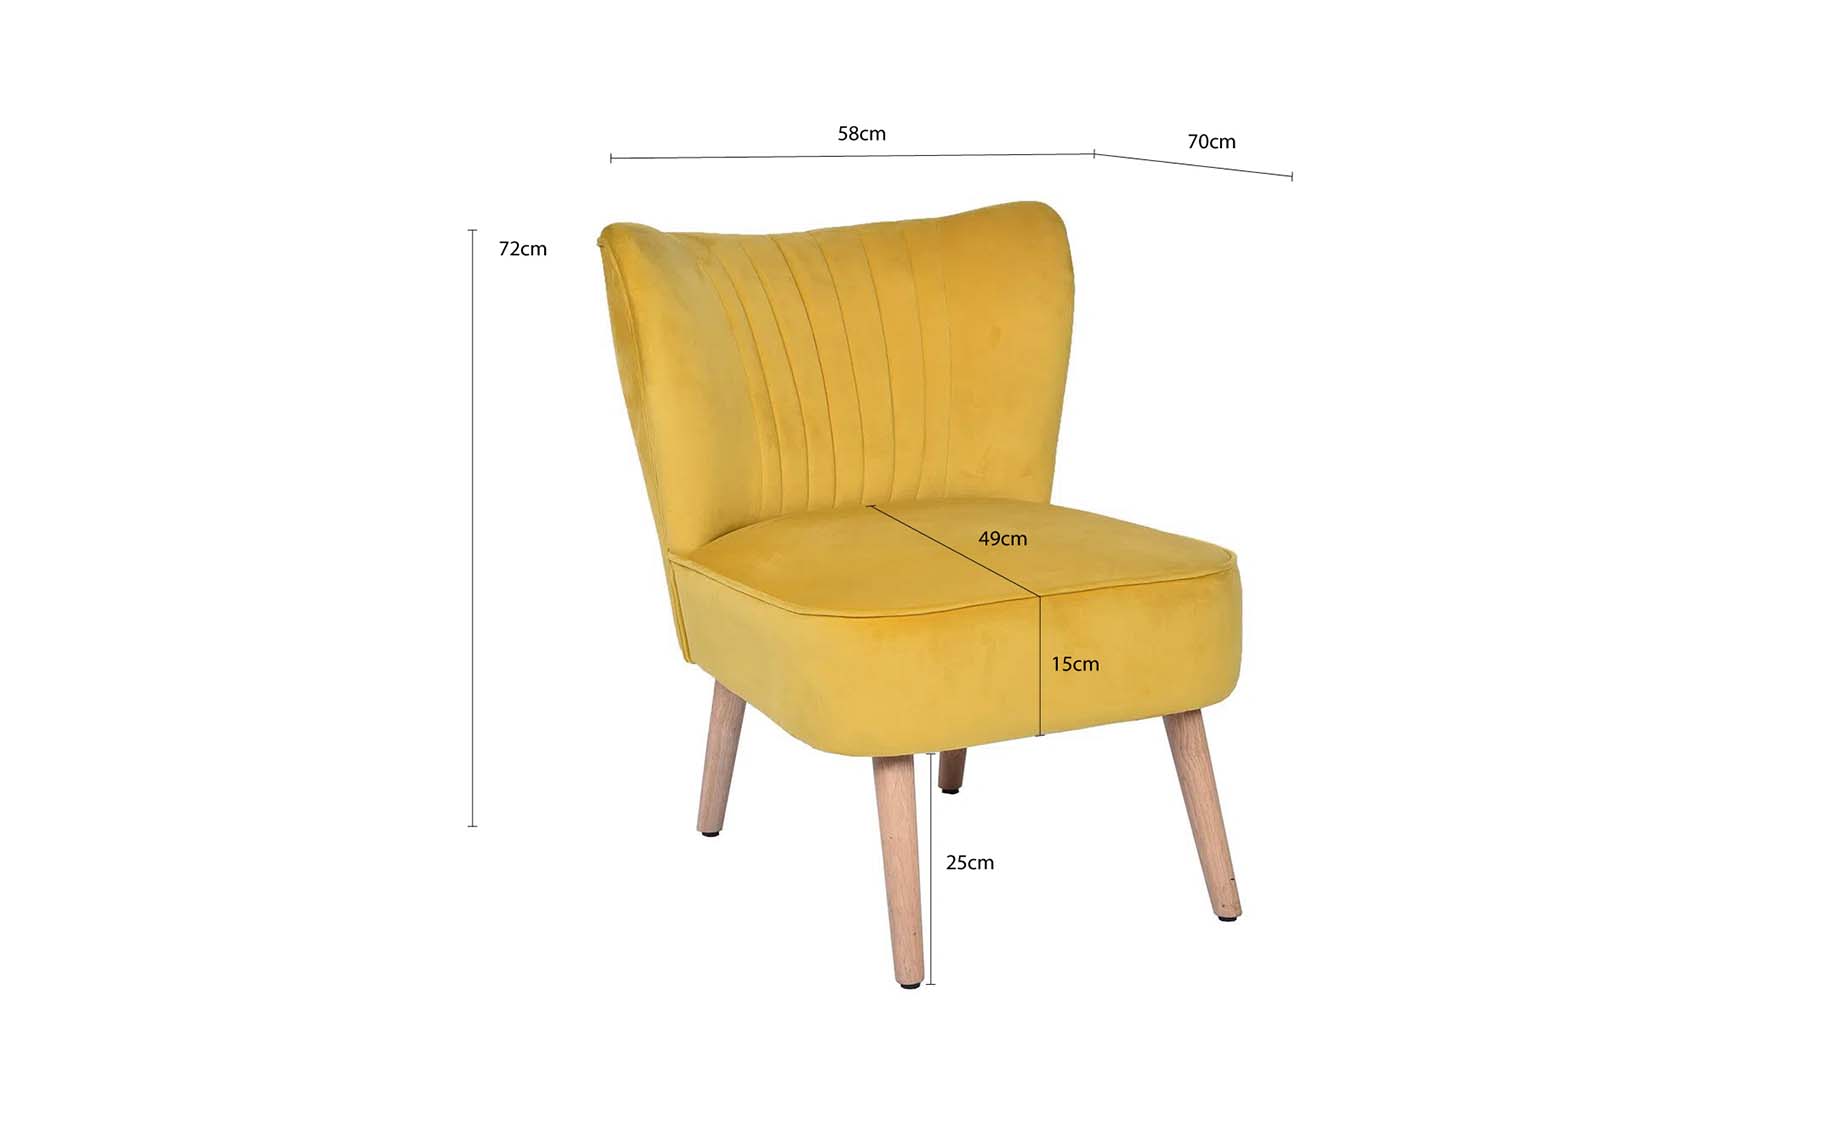 Slate fotelja žuta 58x70x72cm